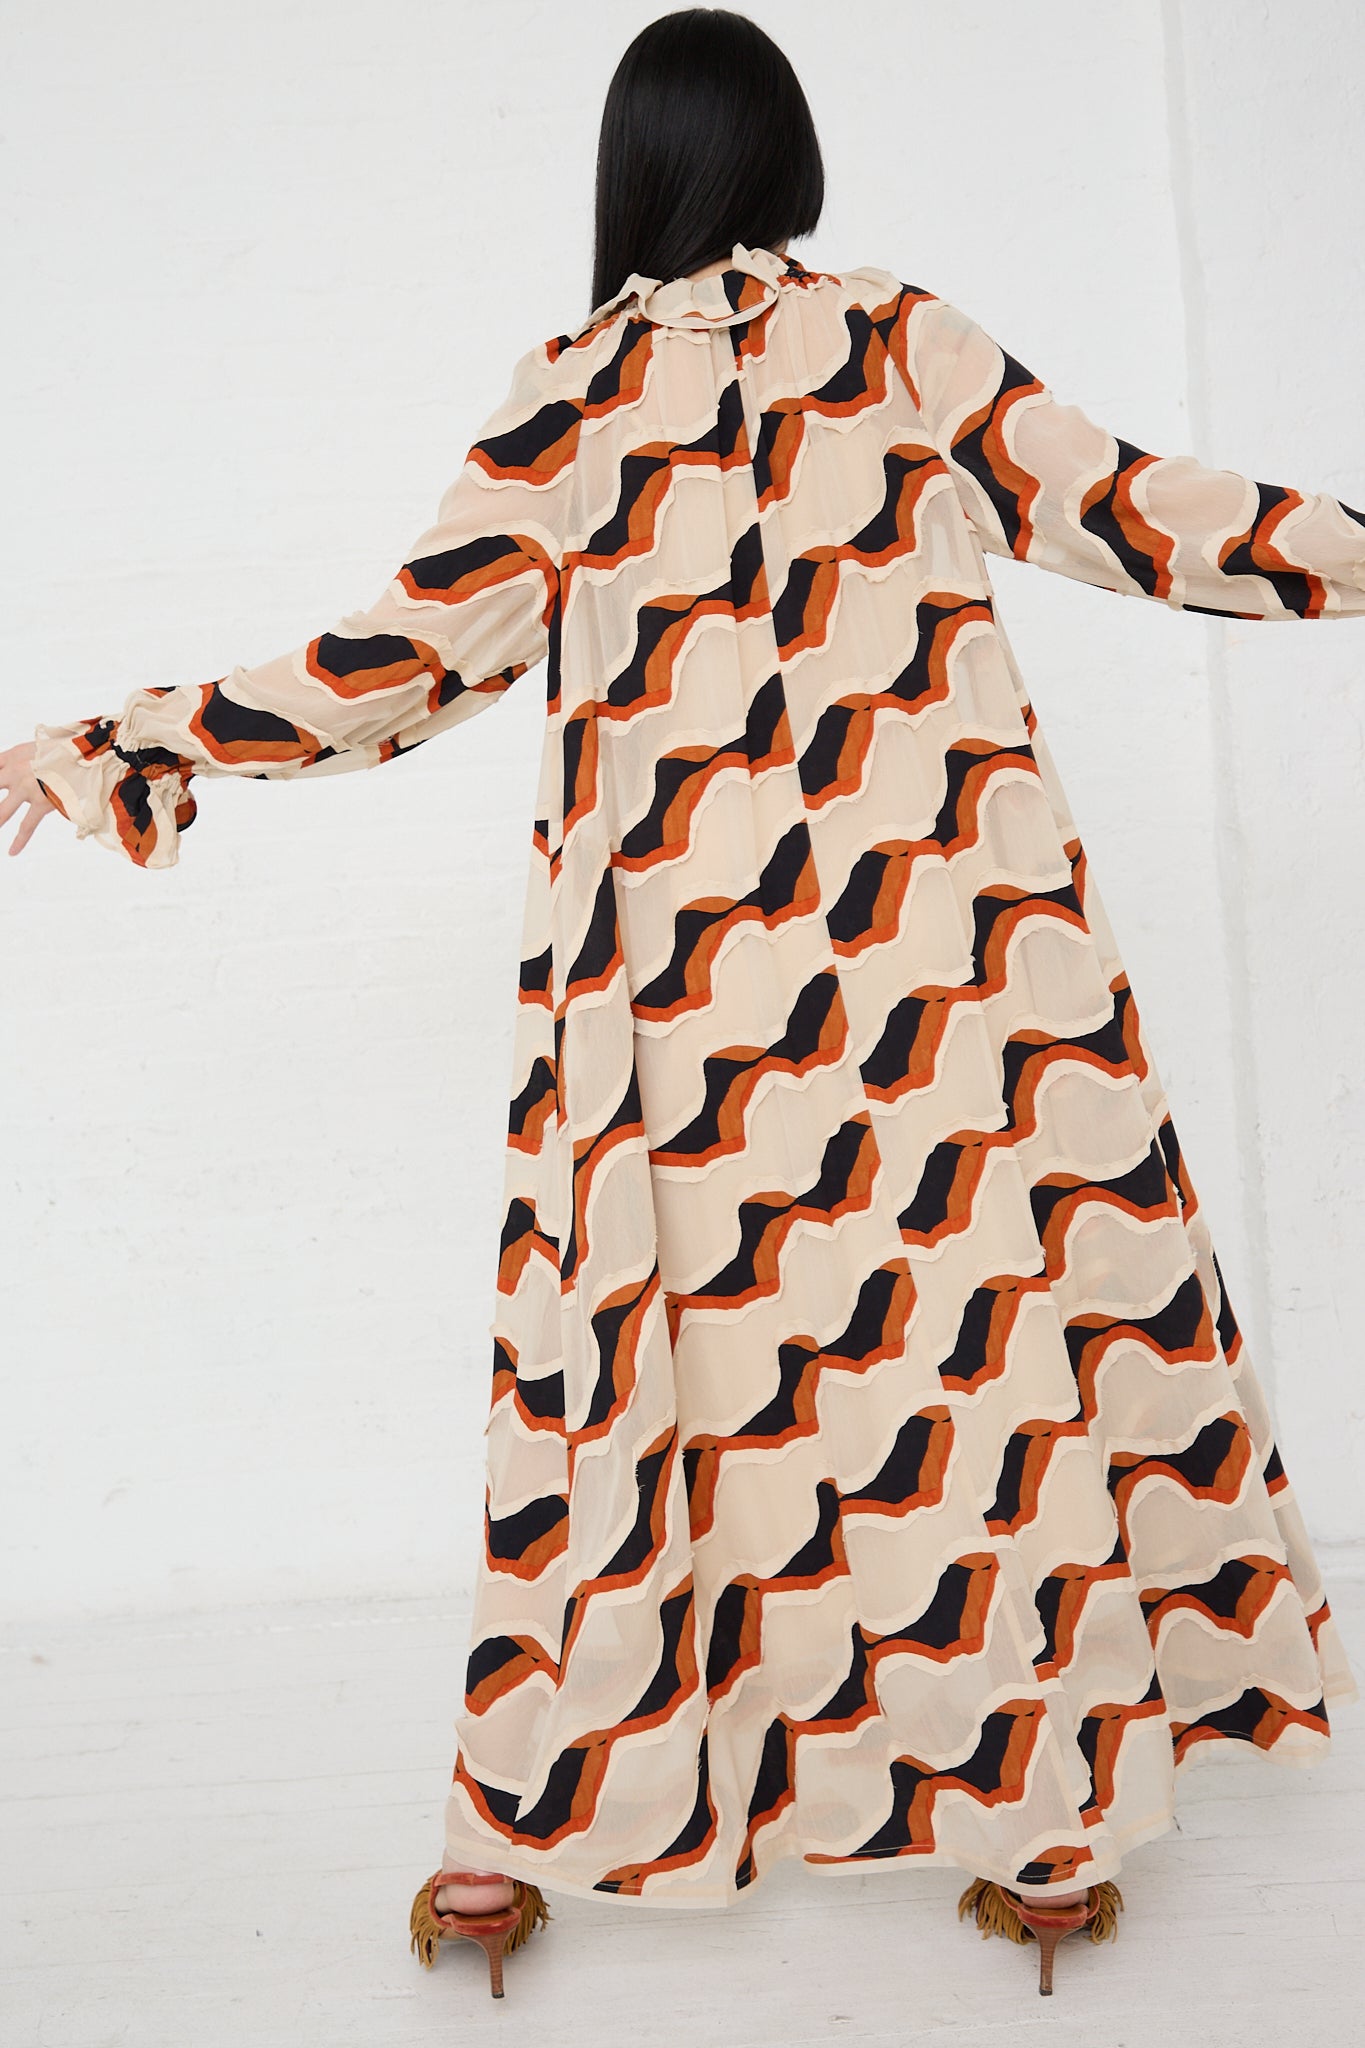 A woman wearing the Ulla Johnson Echo Dress in Conch, a maxi dress in an orange and black print, waving stripe devore.